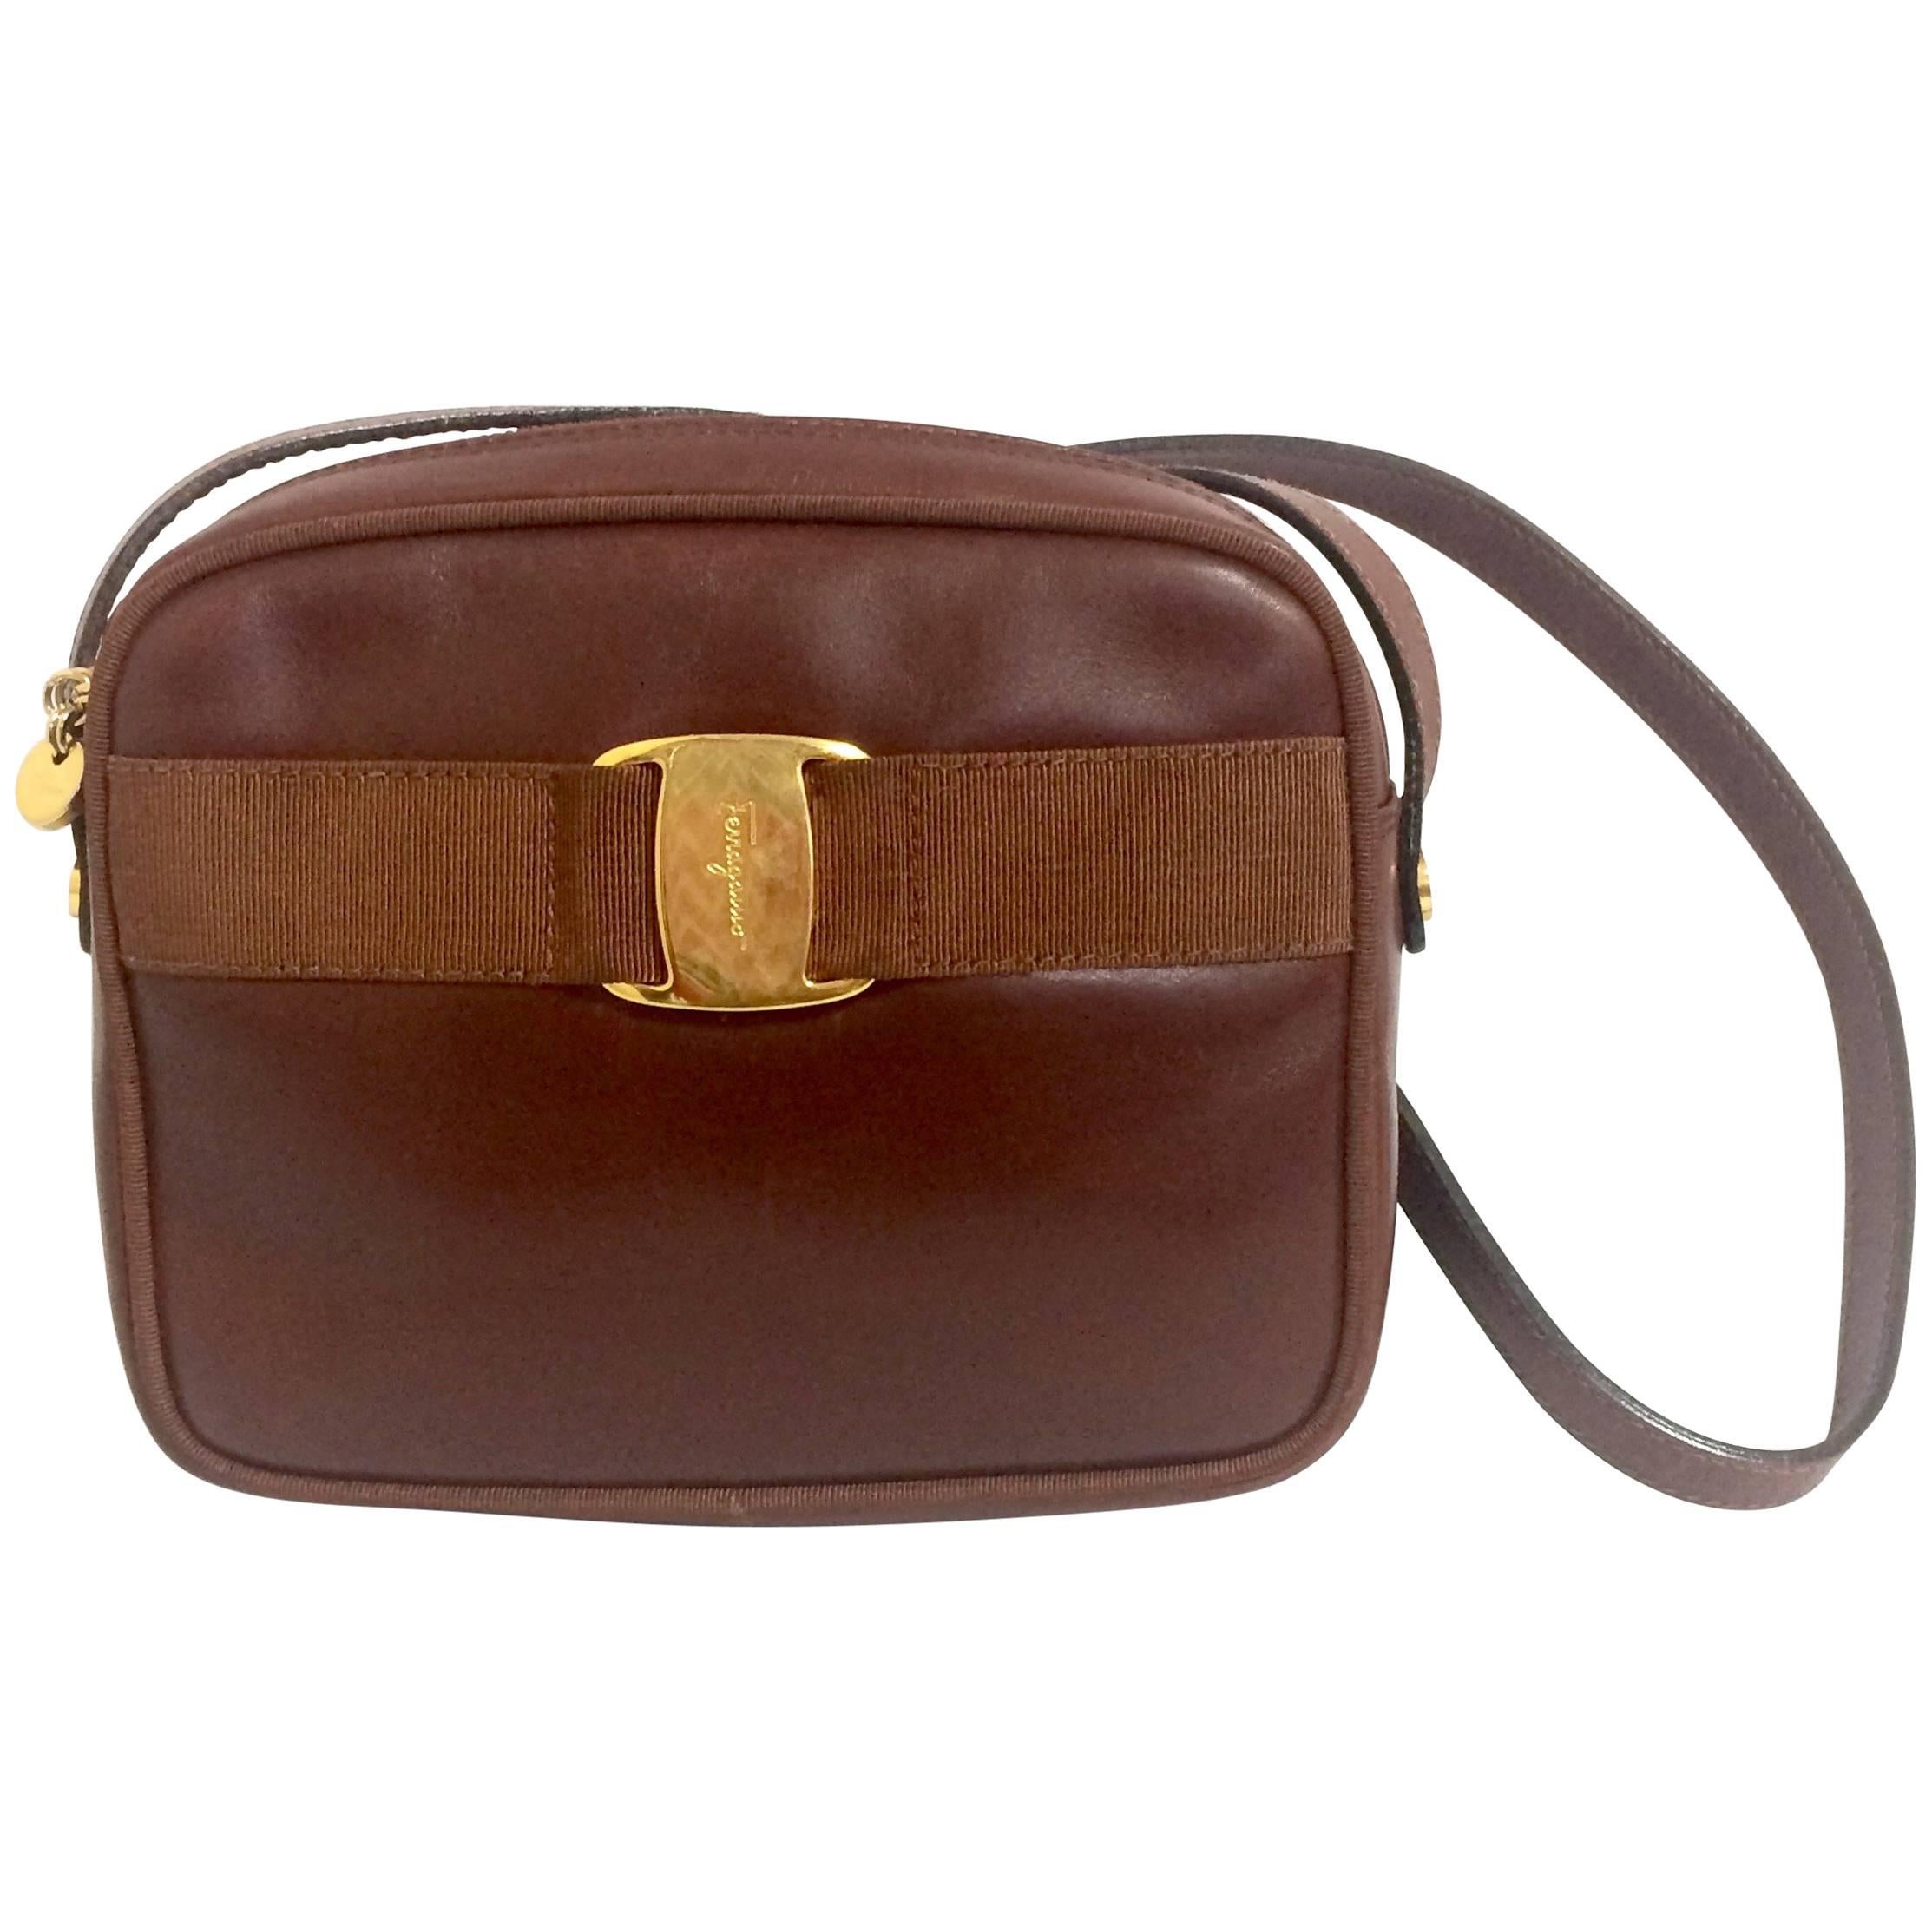 Vintage Salvatore Ferragamo vara collection brown leather purse with logo motif.